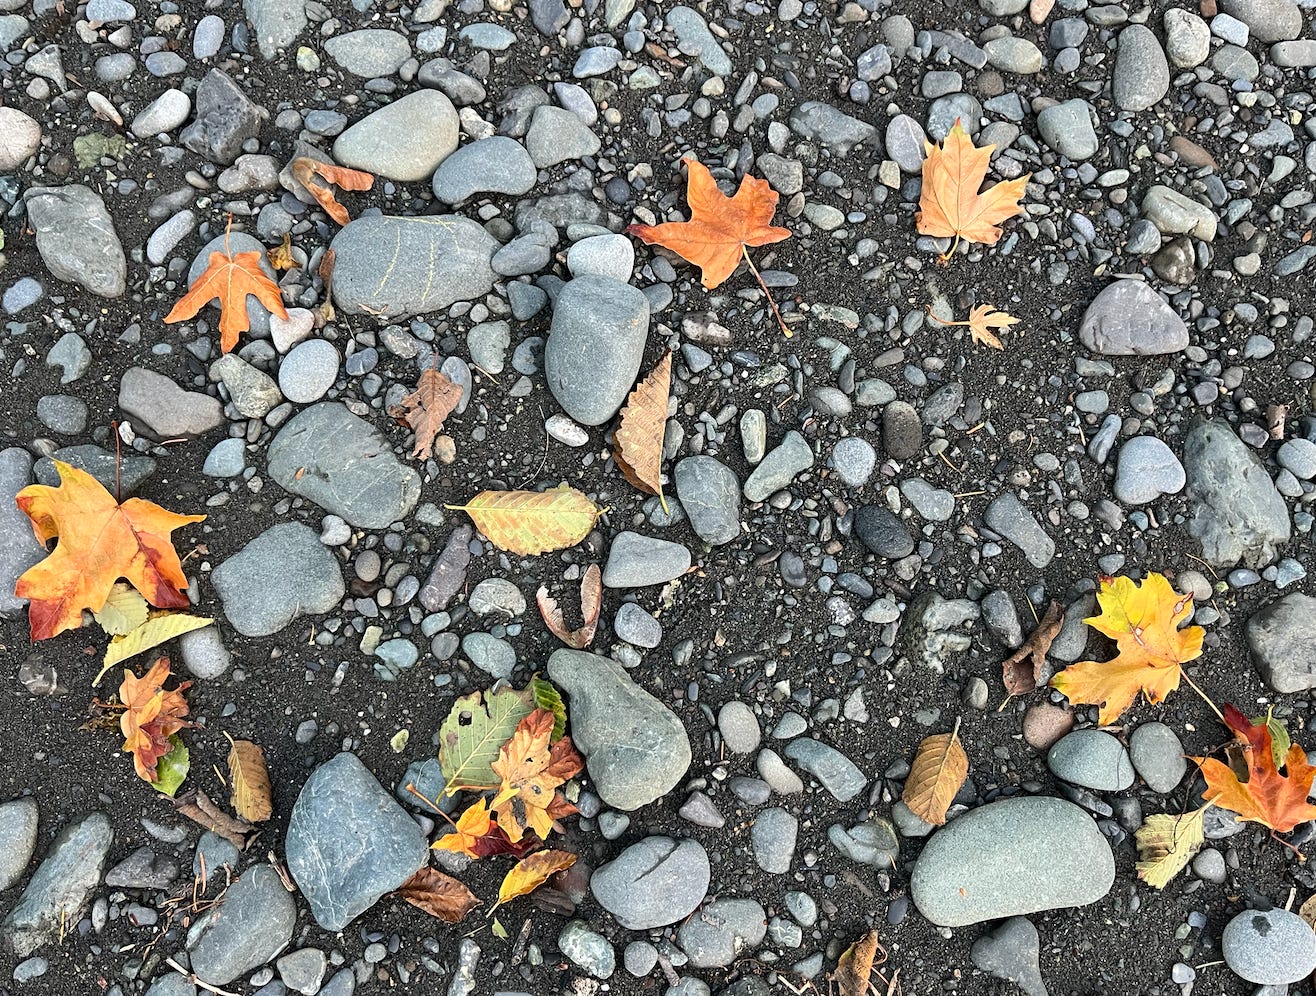 Gray rocks and orange fallen leaves